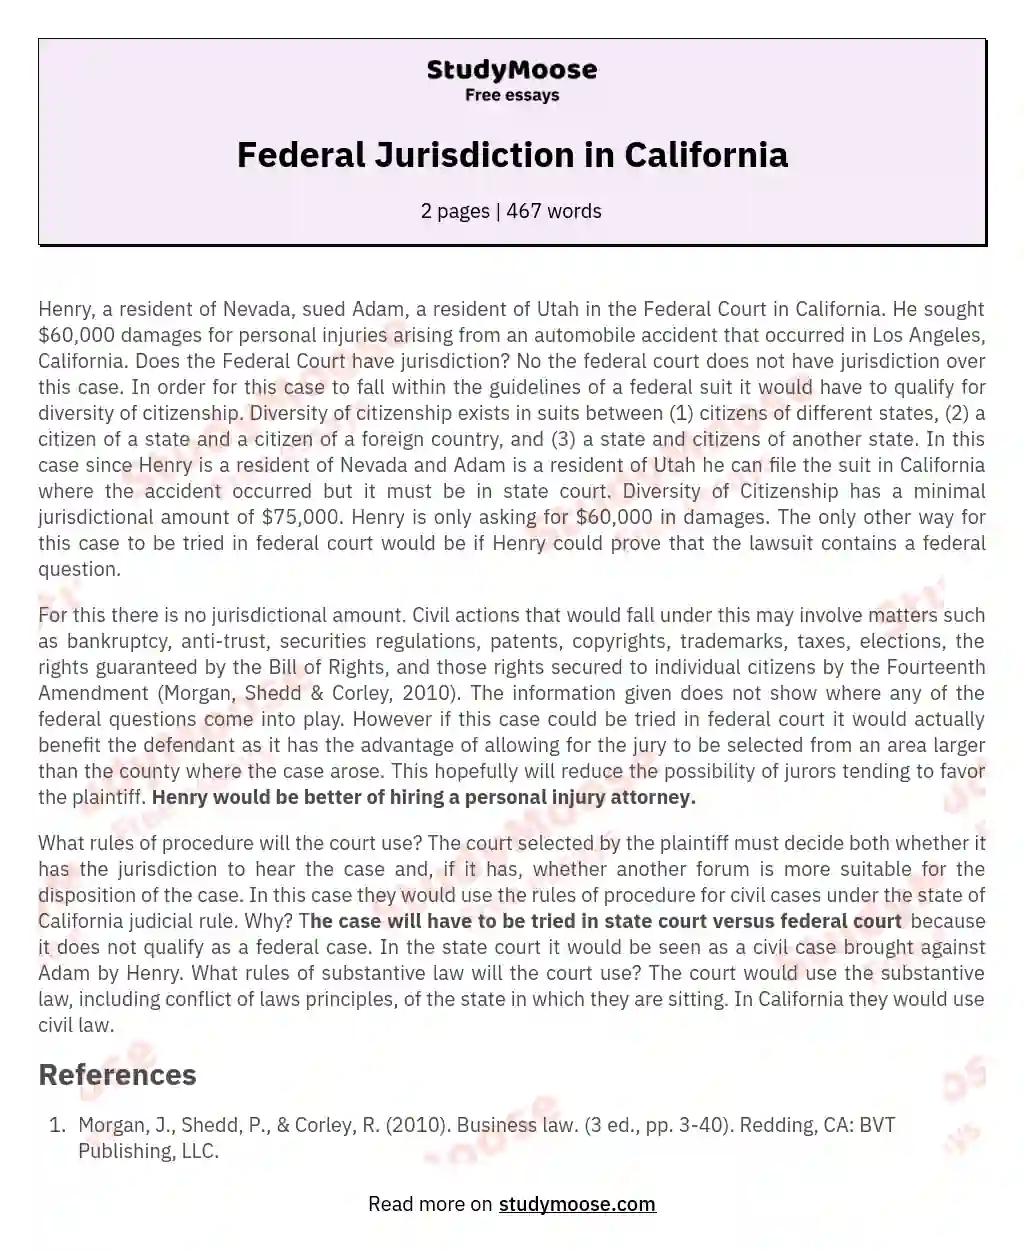 Federal Jurisdiction in California essay